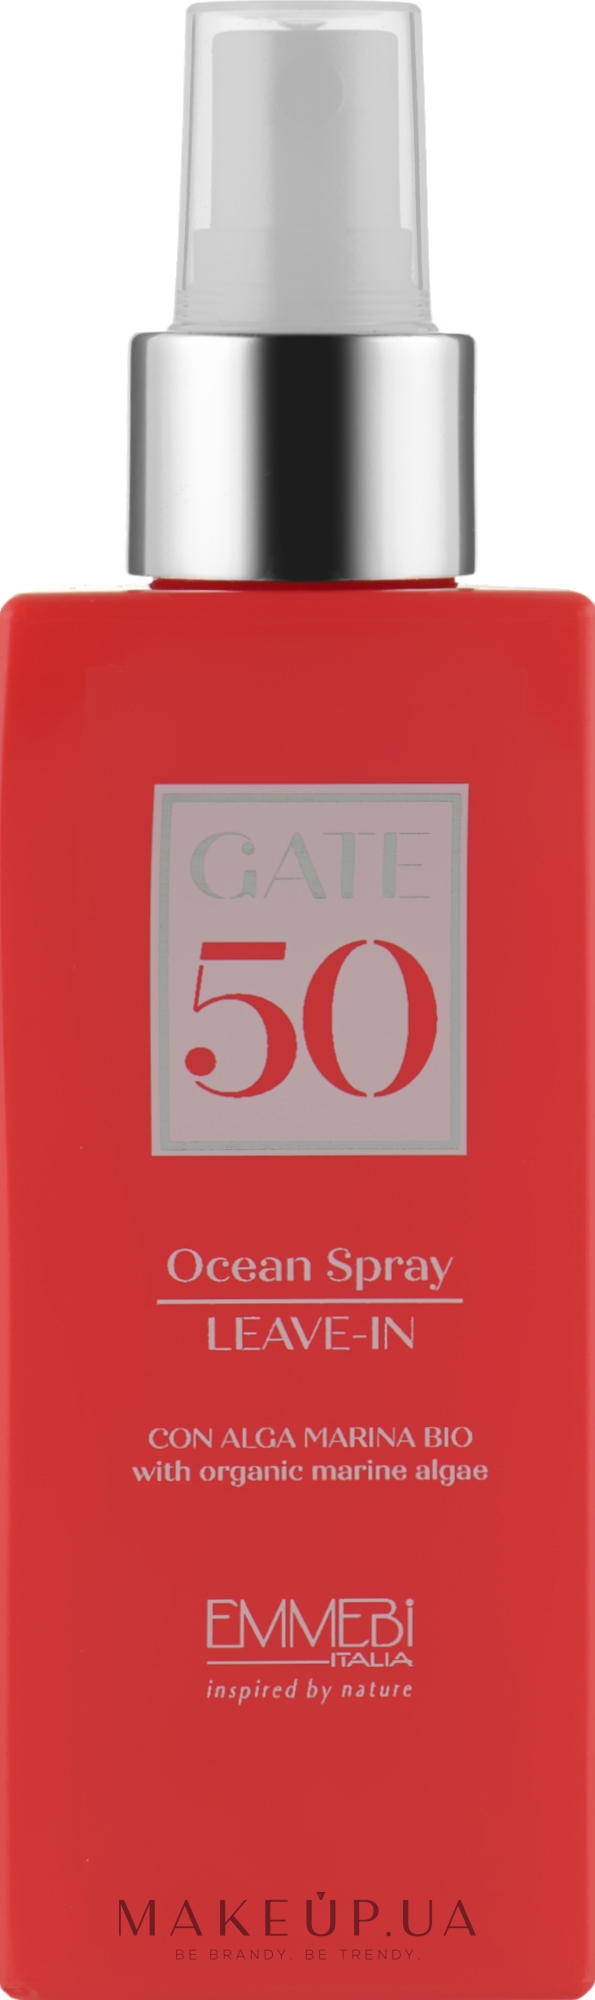 Незмивний спрей для волосся - Emmebi Italia Gate 50 Wash Ocean Spray Leave-In — фото 125ml